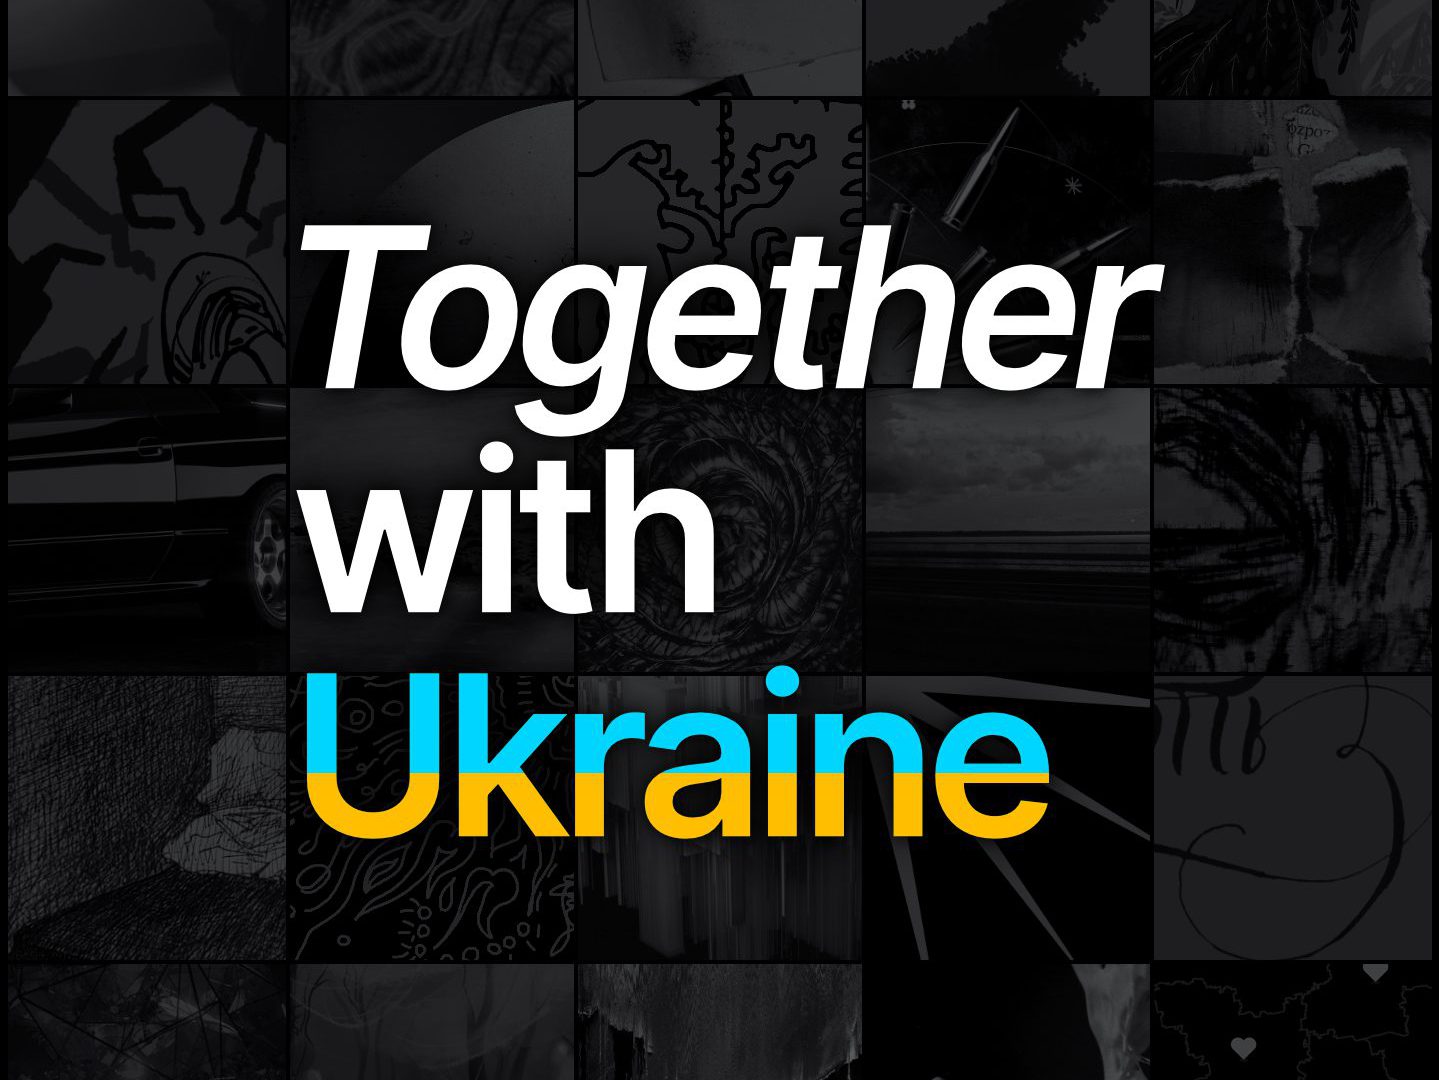 Together with Ukraine Avatar